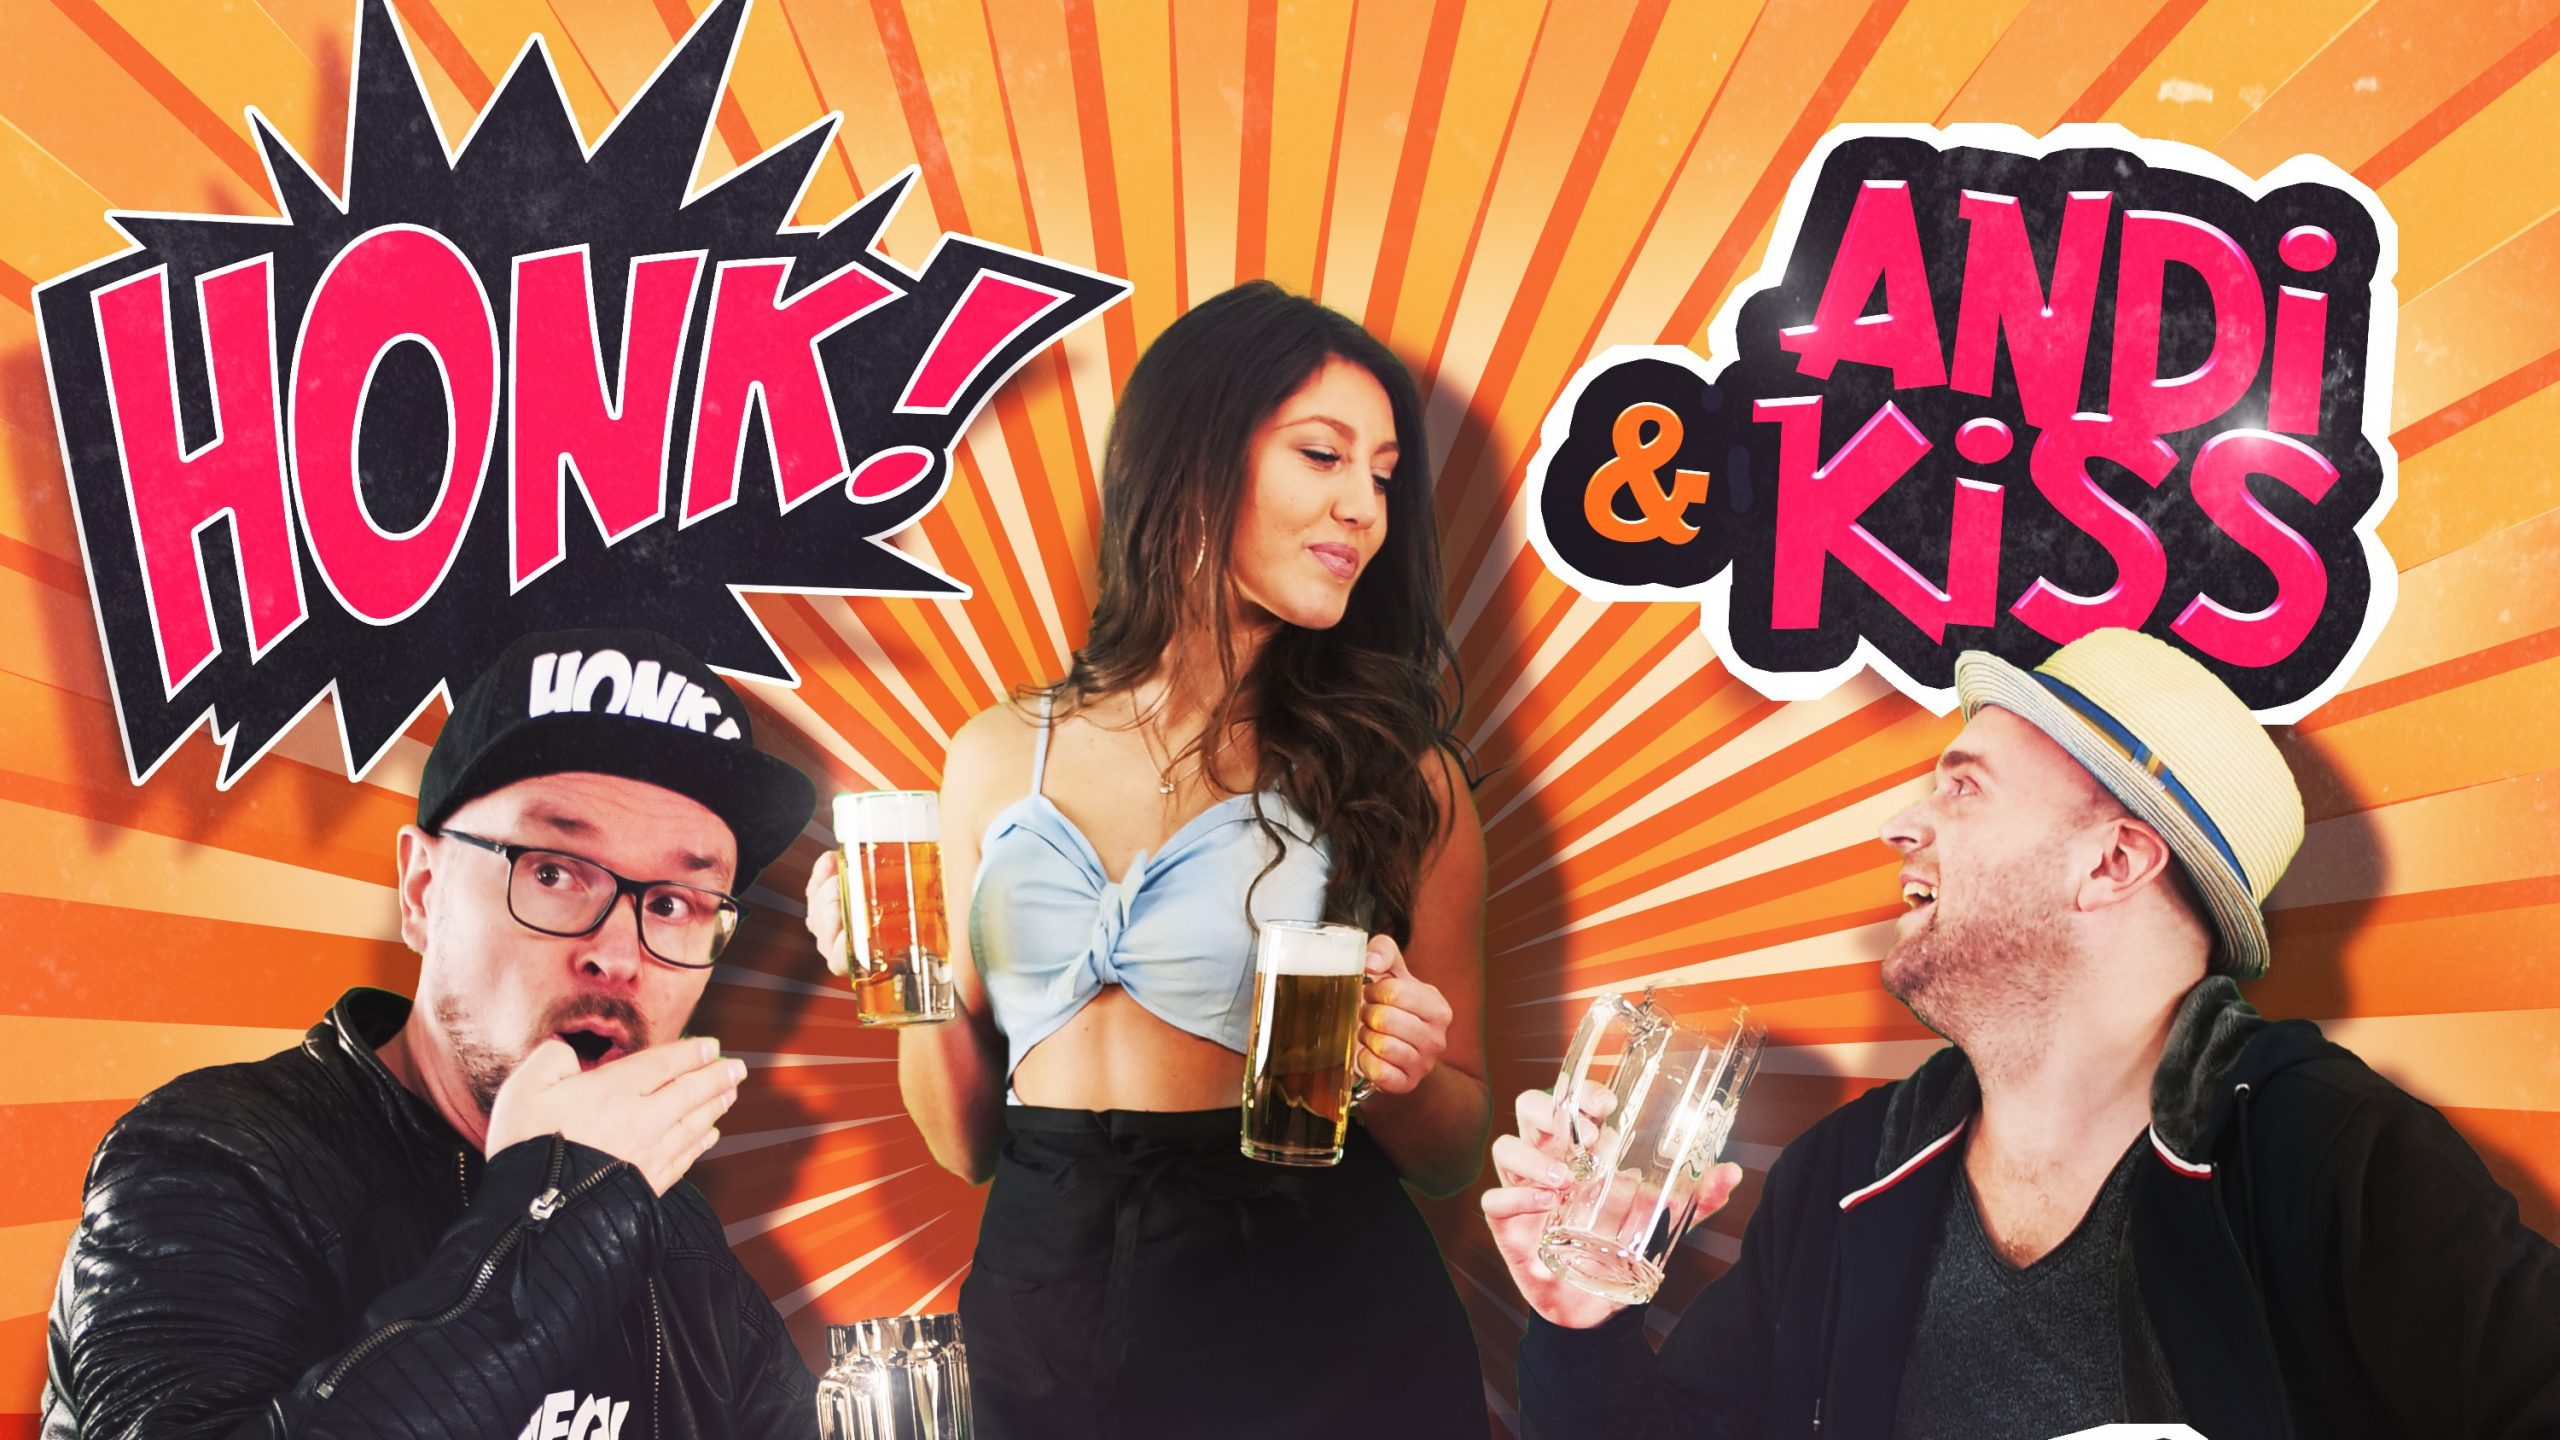 Hit zum Feiern: Honk! & Andi Kiss mit „Suffia“